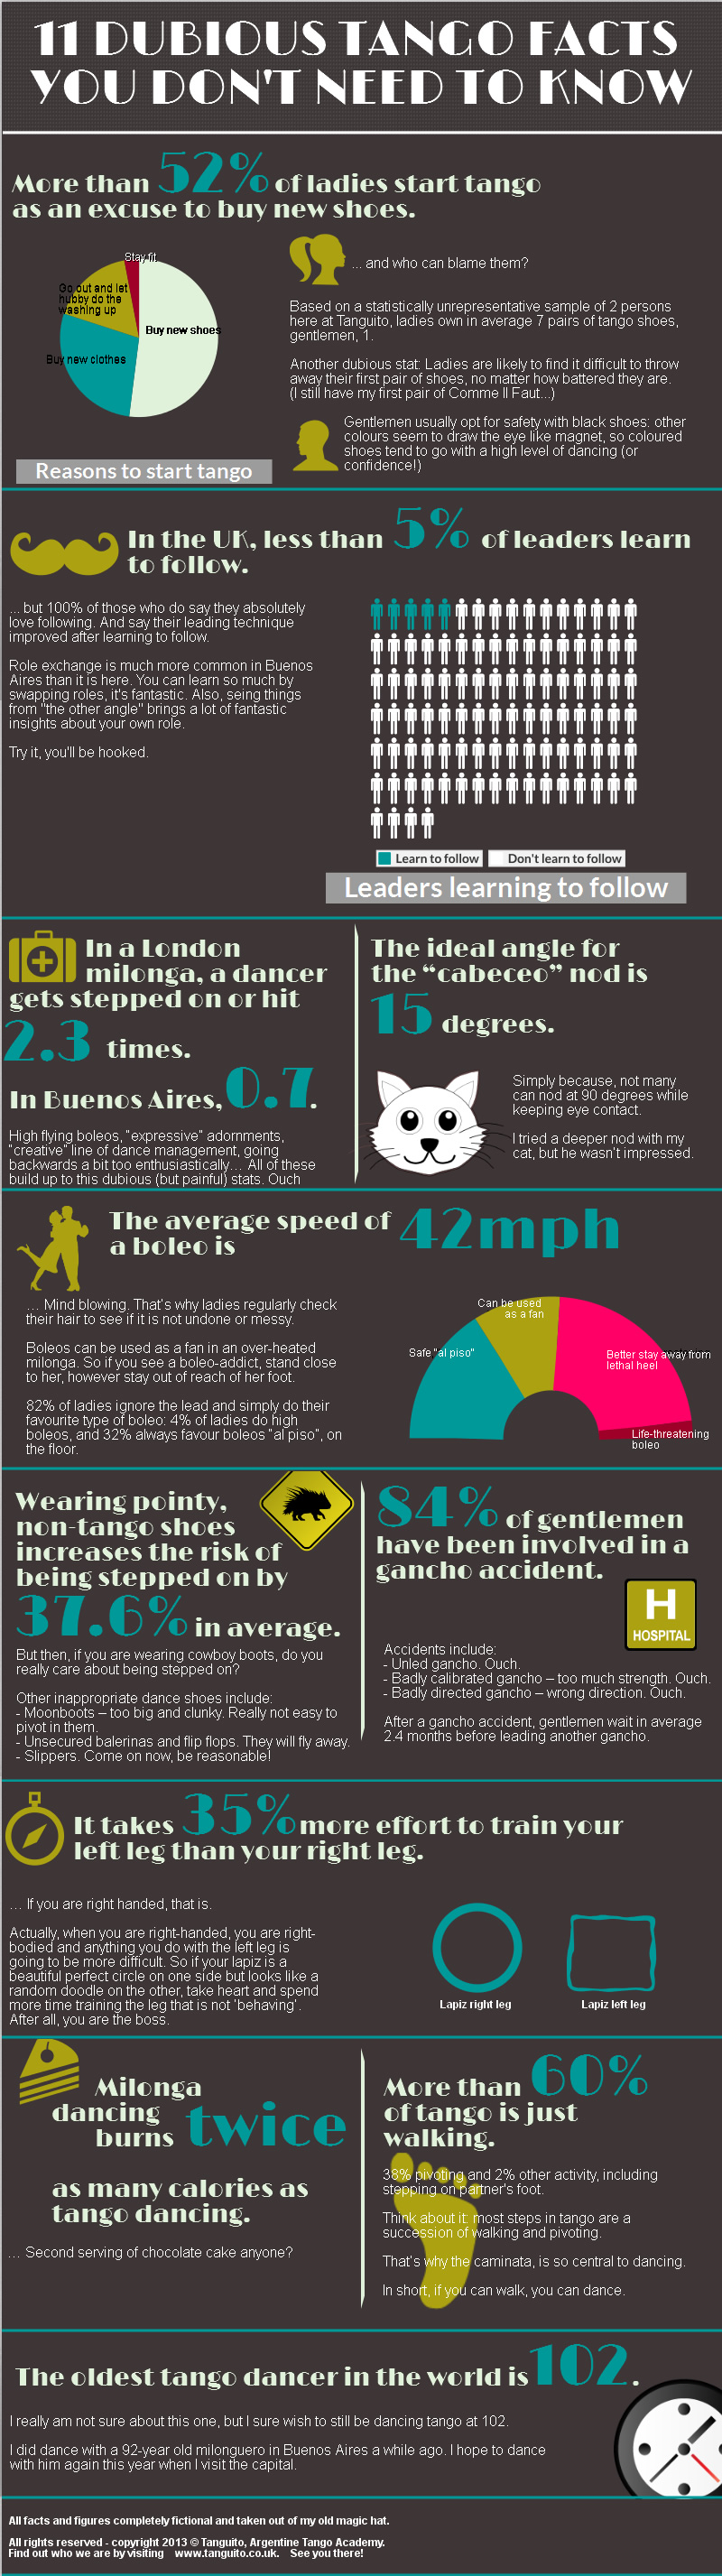 11 dubious tango facts